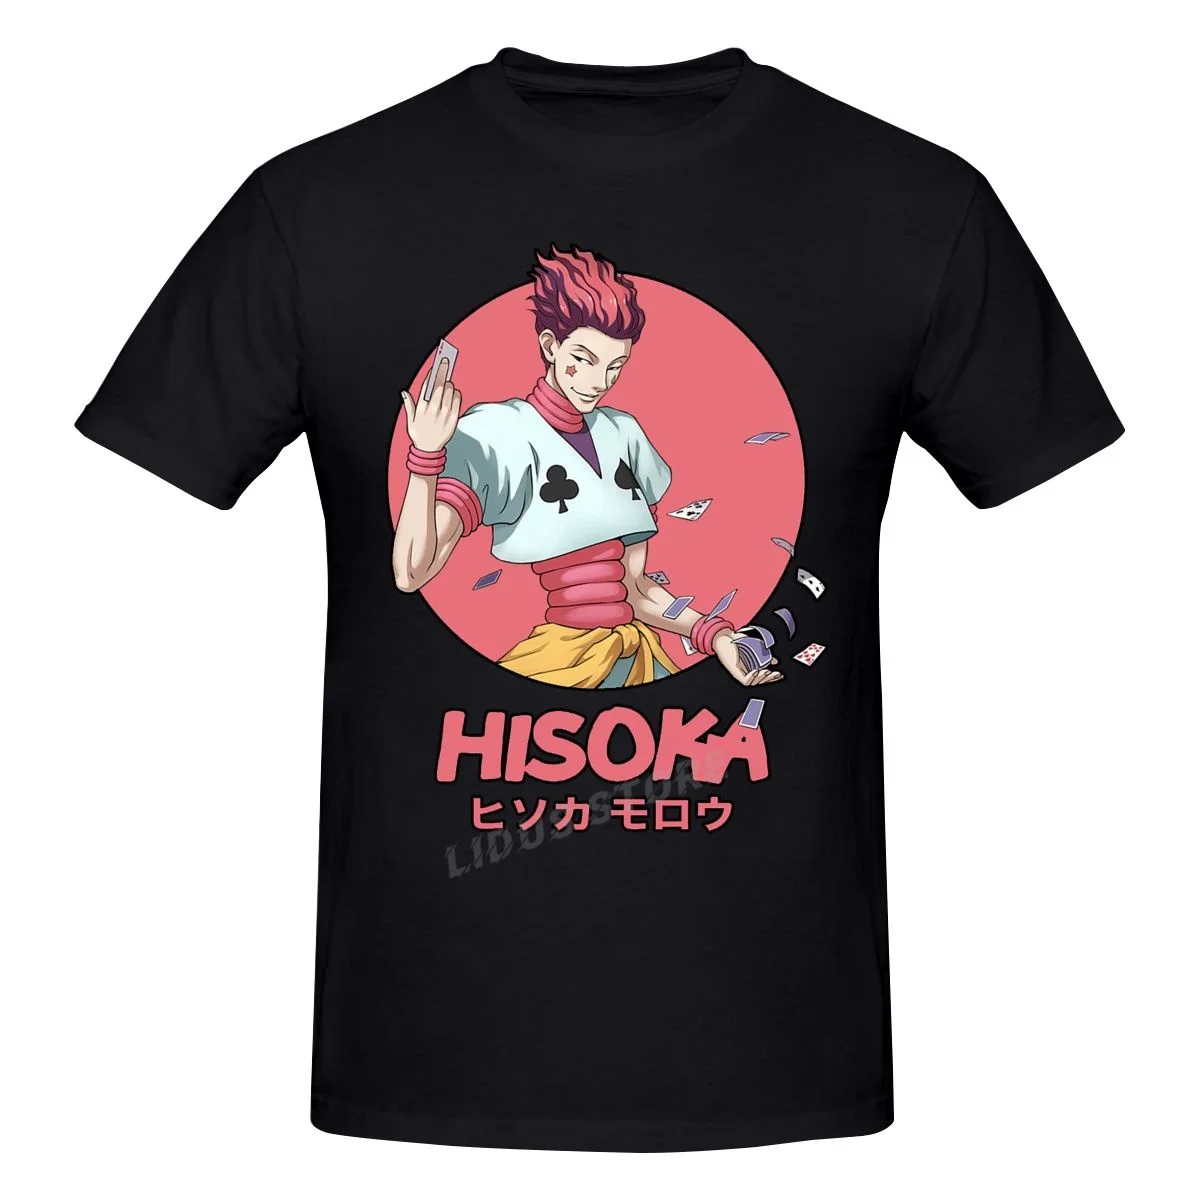 

HxH Hisoka Morow Japan Anime Hunter X Hunter Fitted Apparel T shirt Harajuku Clothing Cotton Sweatshirts Graphics Tshirt Tee Top